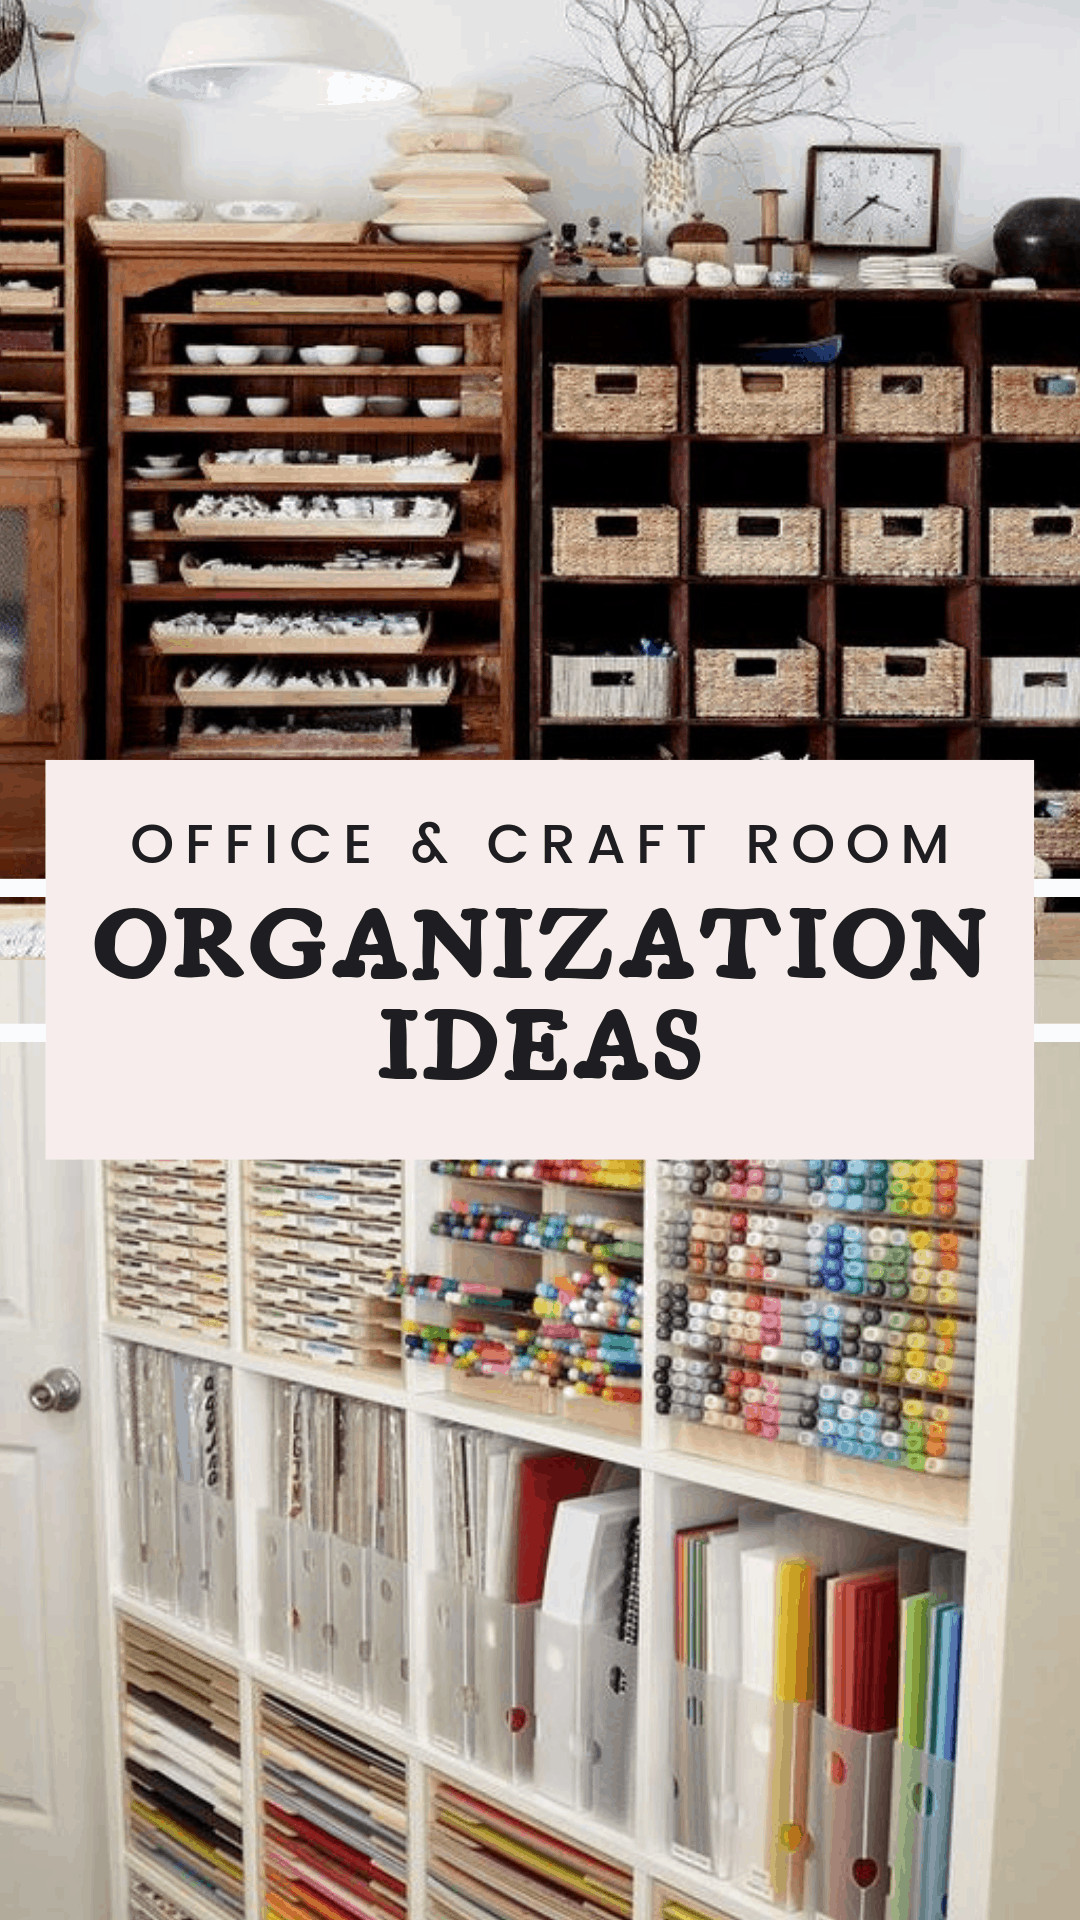 Organization Ideas For Craft Room
 15 Stunning fice & Craft Room Organization Ideas